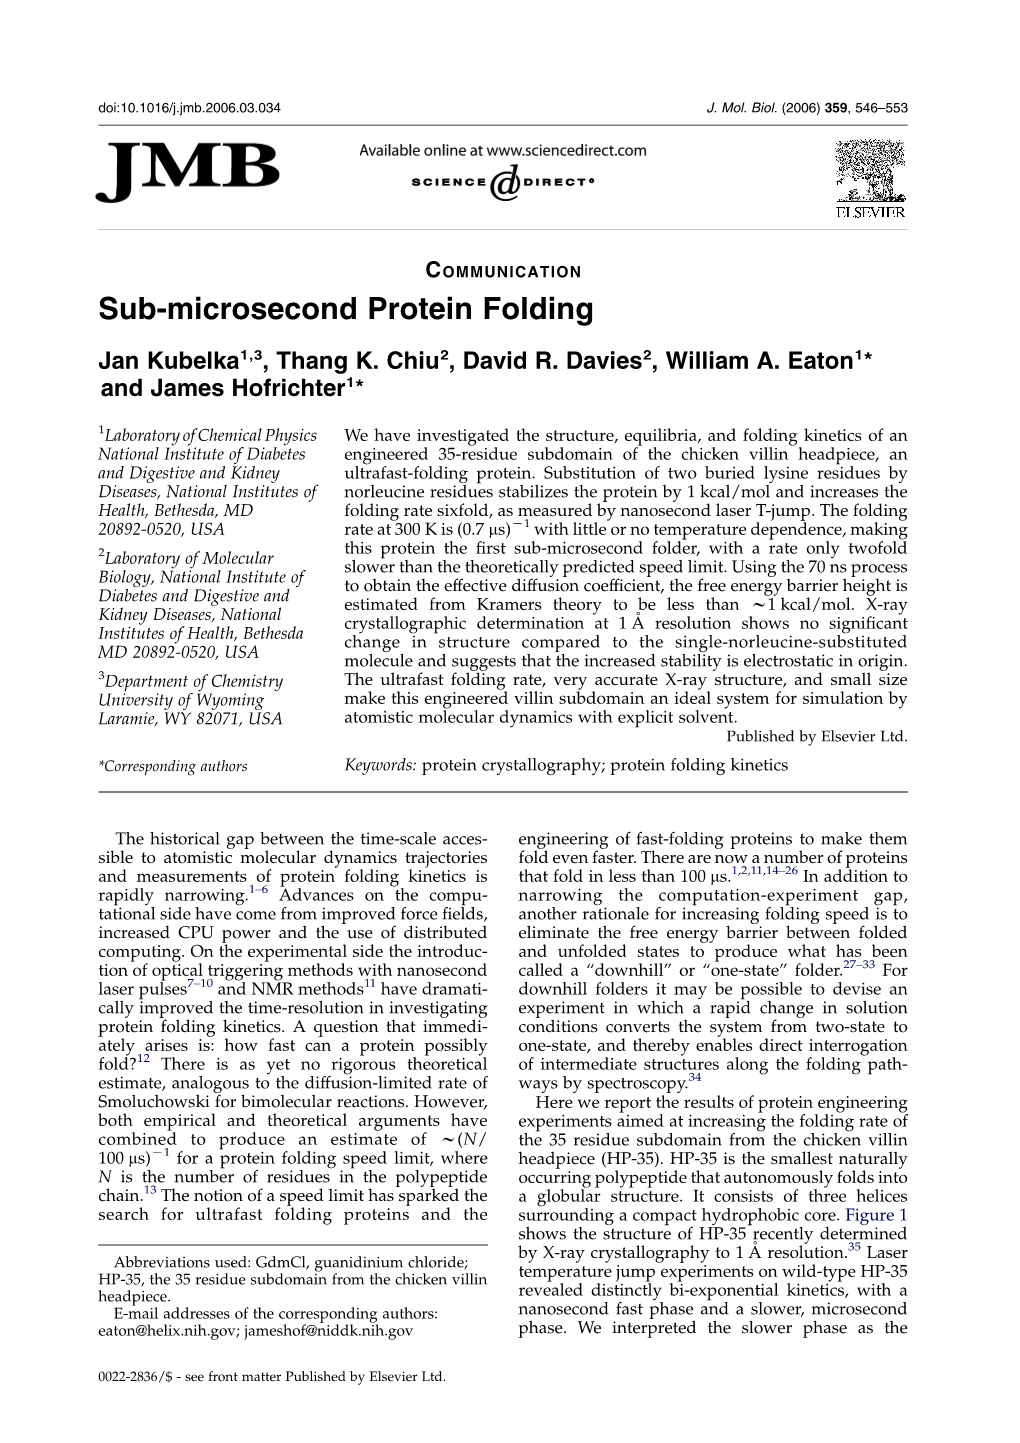 Sub-Microsecond Protein Folding